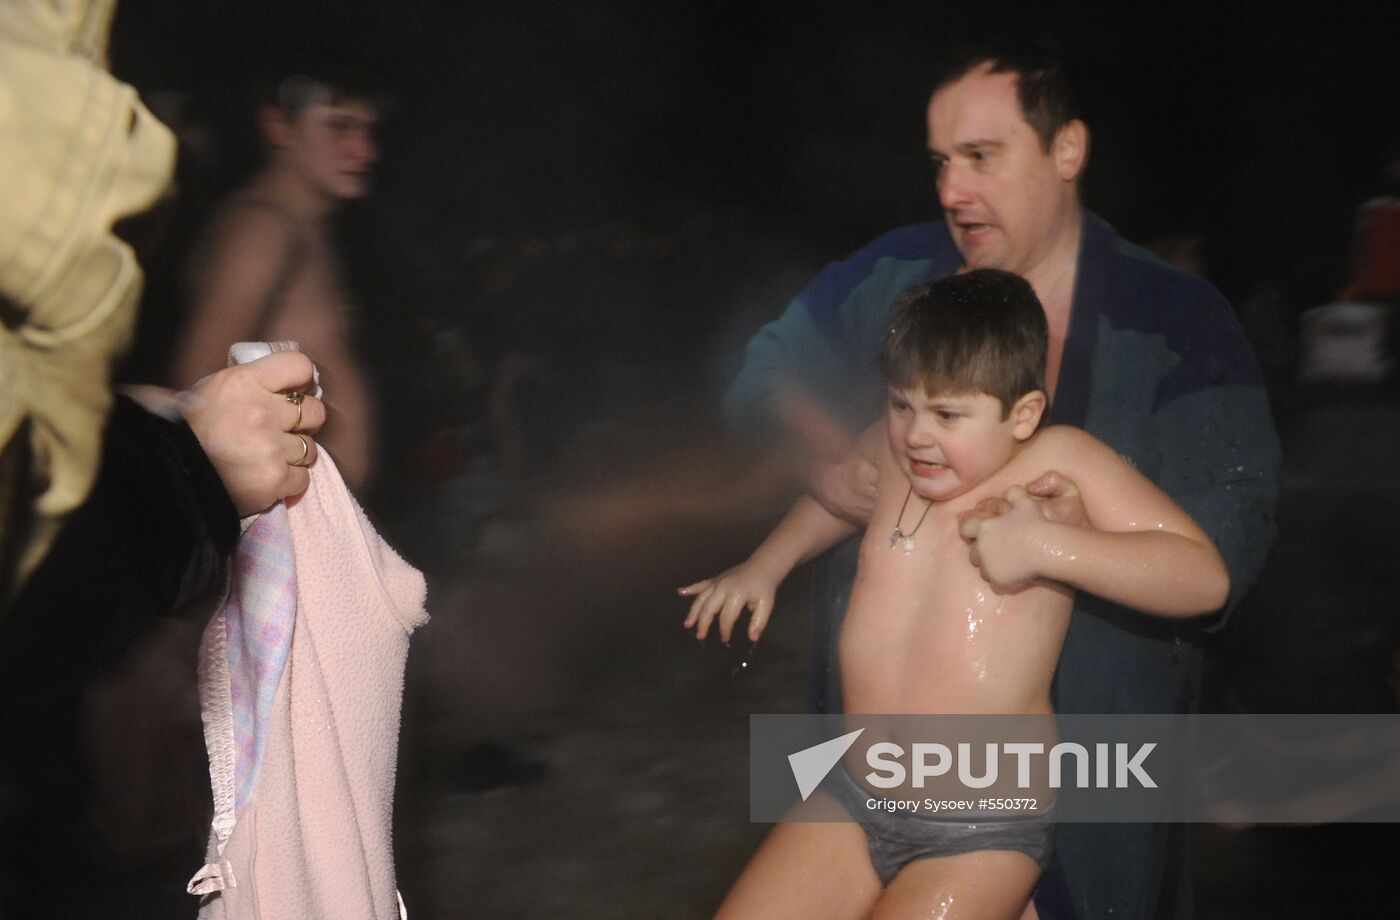 Epiphany bathing in Moscow Region